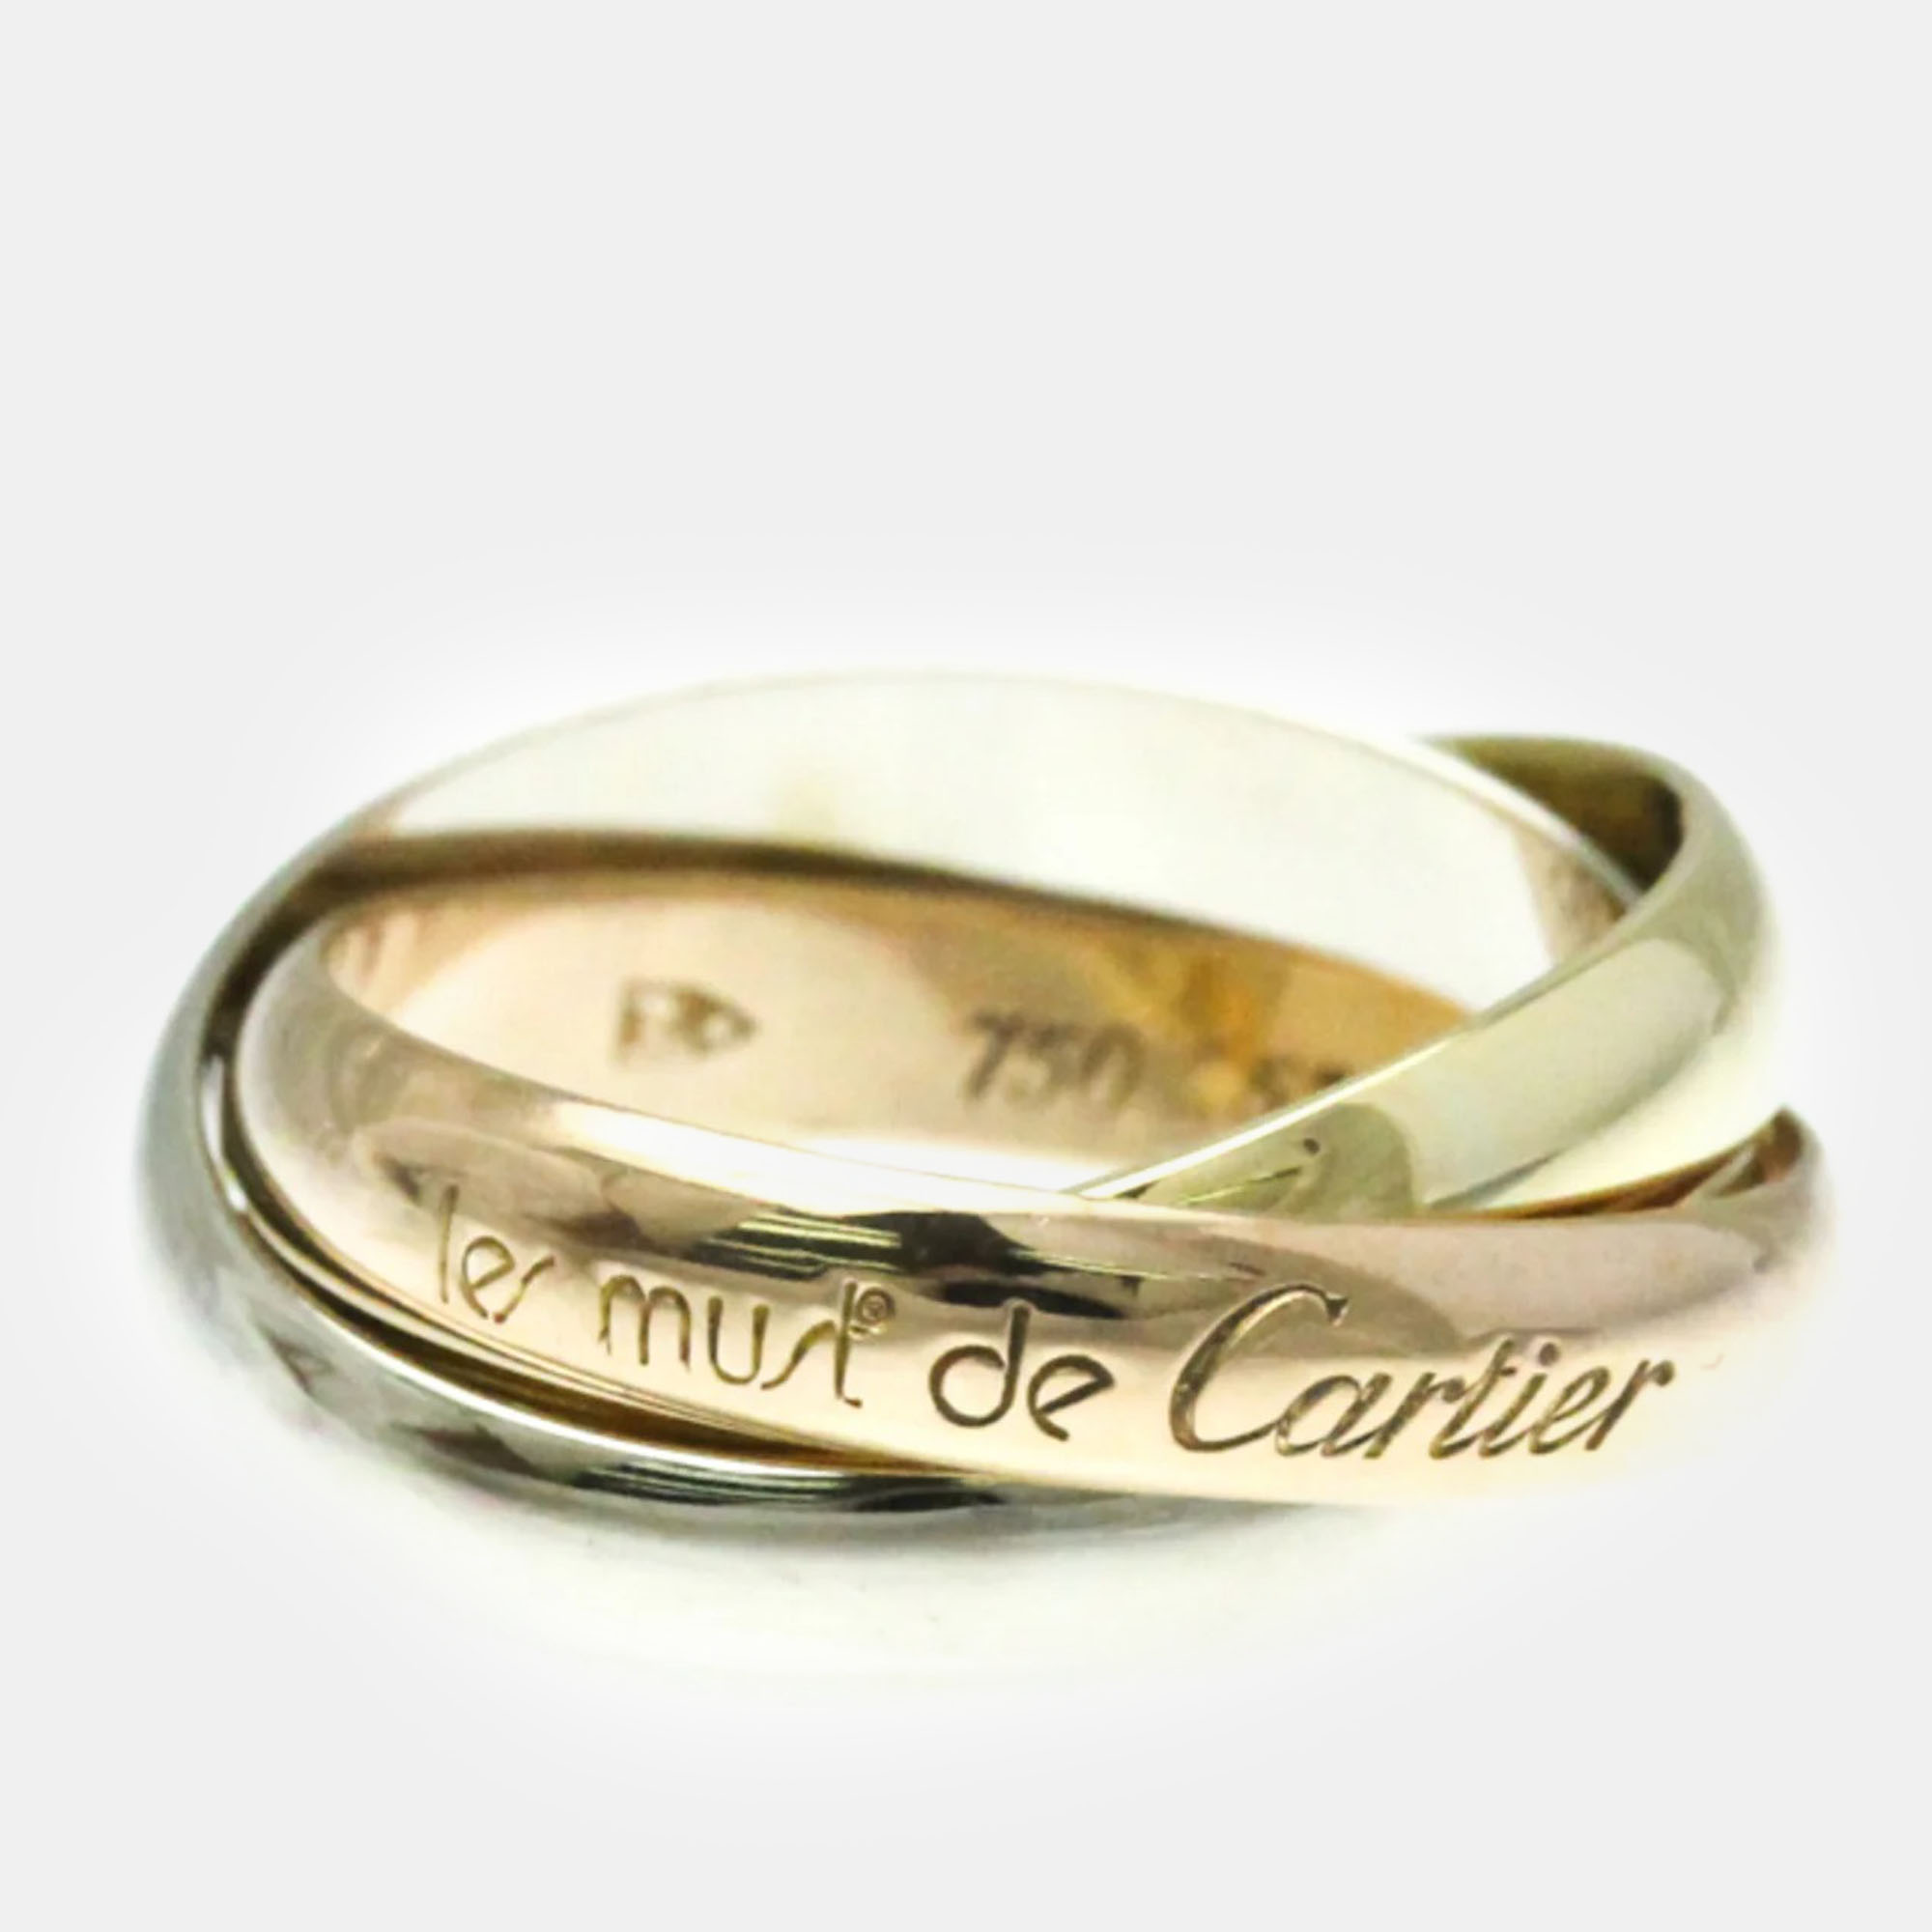 Cartier 18k yellow, rose, white gold trinity band ring eu 52